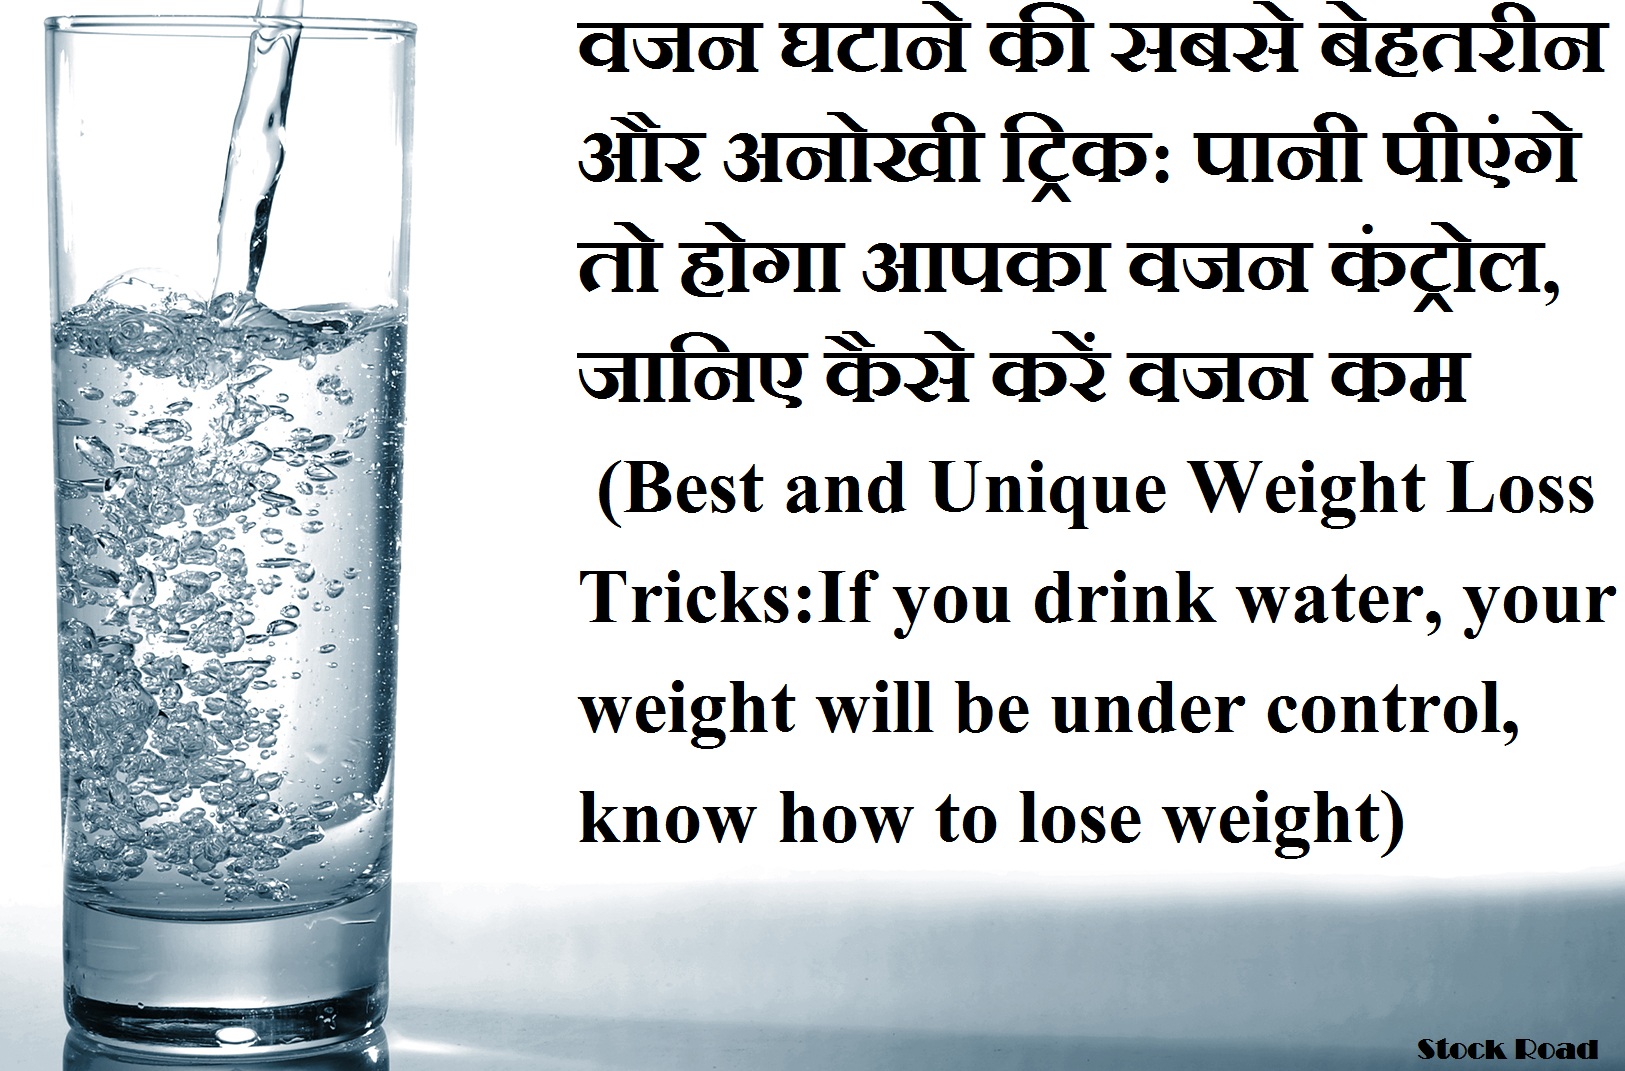 वजन घटाने की सबसे बेहतरीन और अनोखी ट्रिक: पानी पीएंगे तो होगा आपका वजन कंट्रोल, जानिए कैसे करें वजन कम (Best and Unique Weight Loss Tricks:If you drink water, your weight will be under control, know how to lose weight)